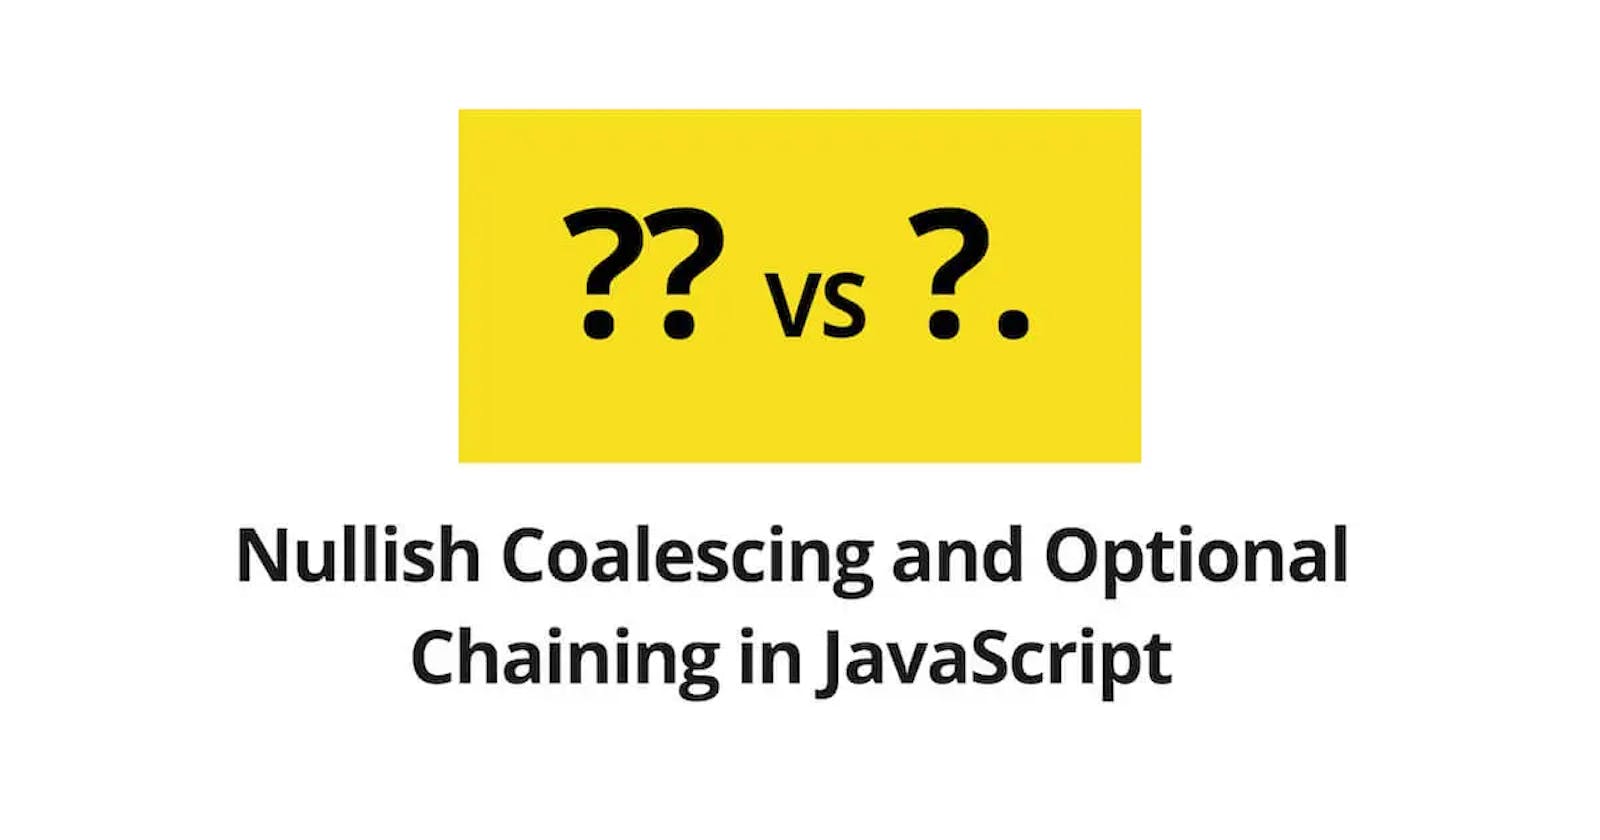 JavaScript's Nullish Coalescing and Optional Chaining, Explained